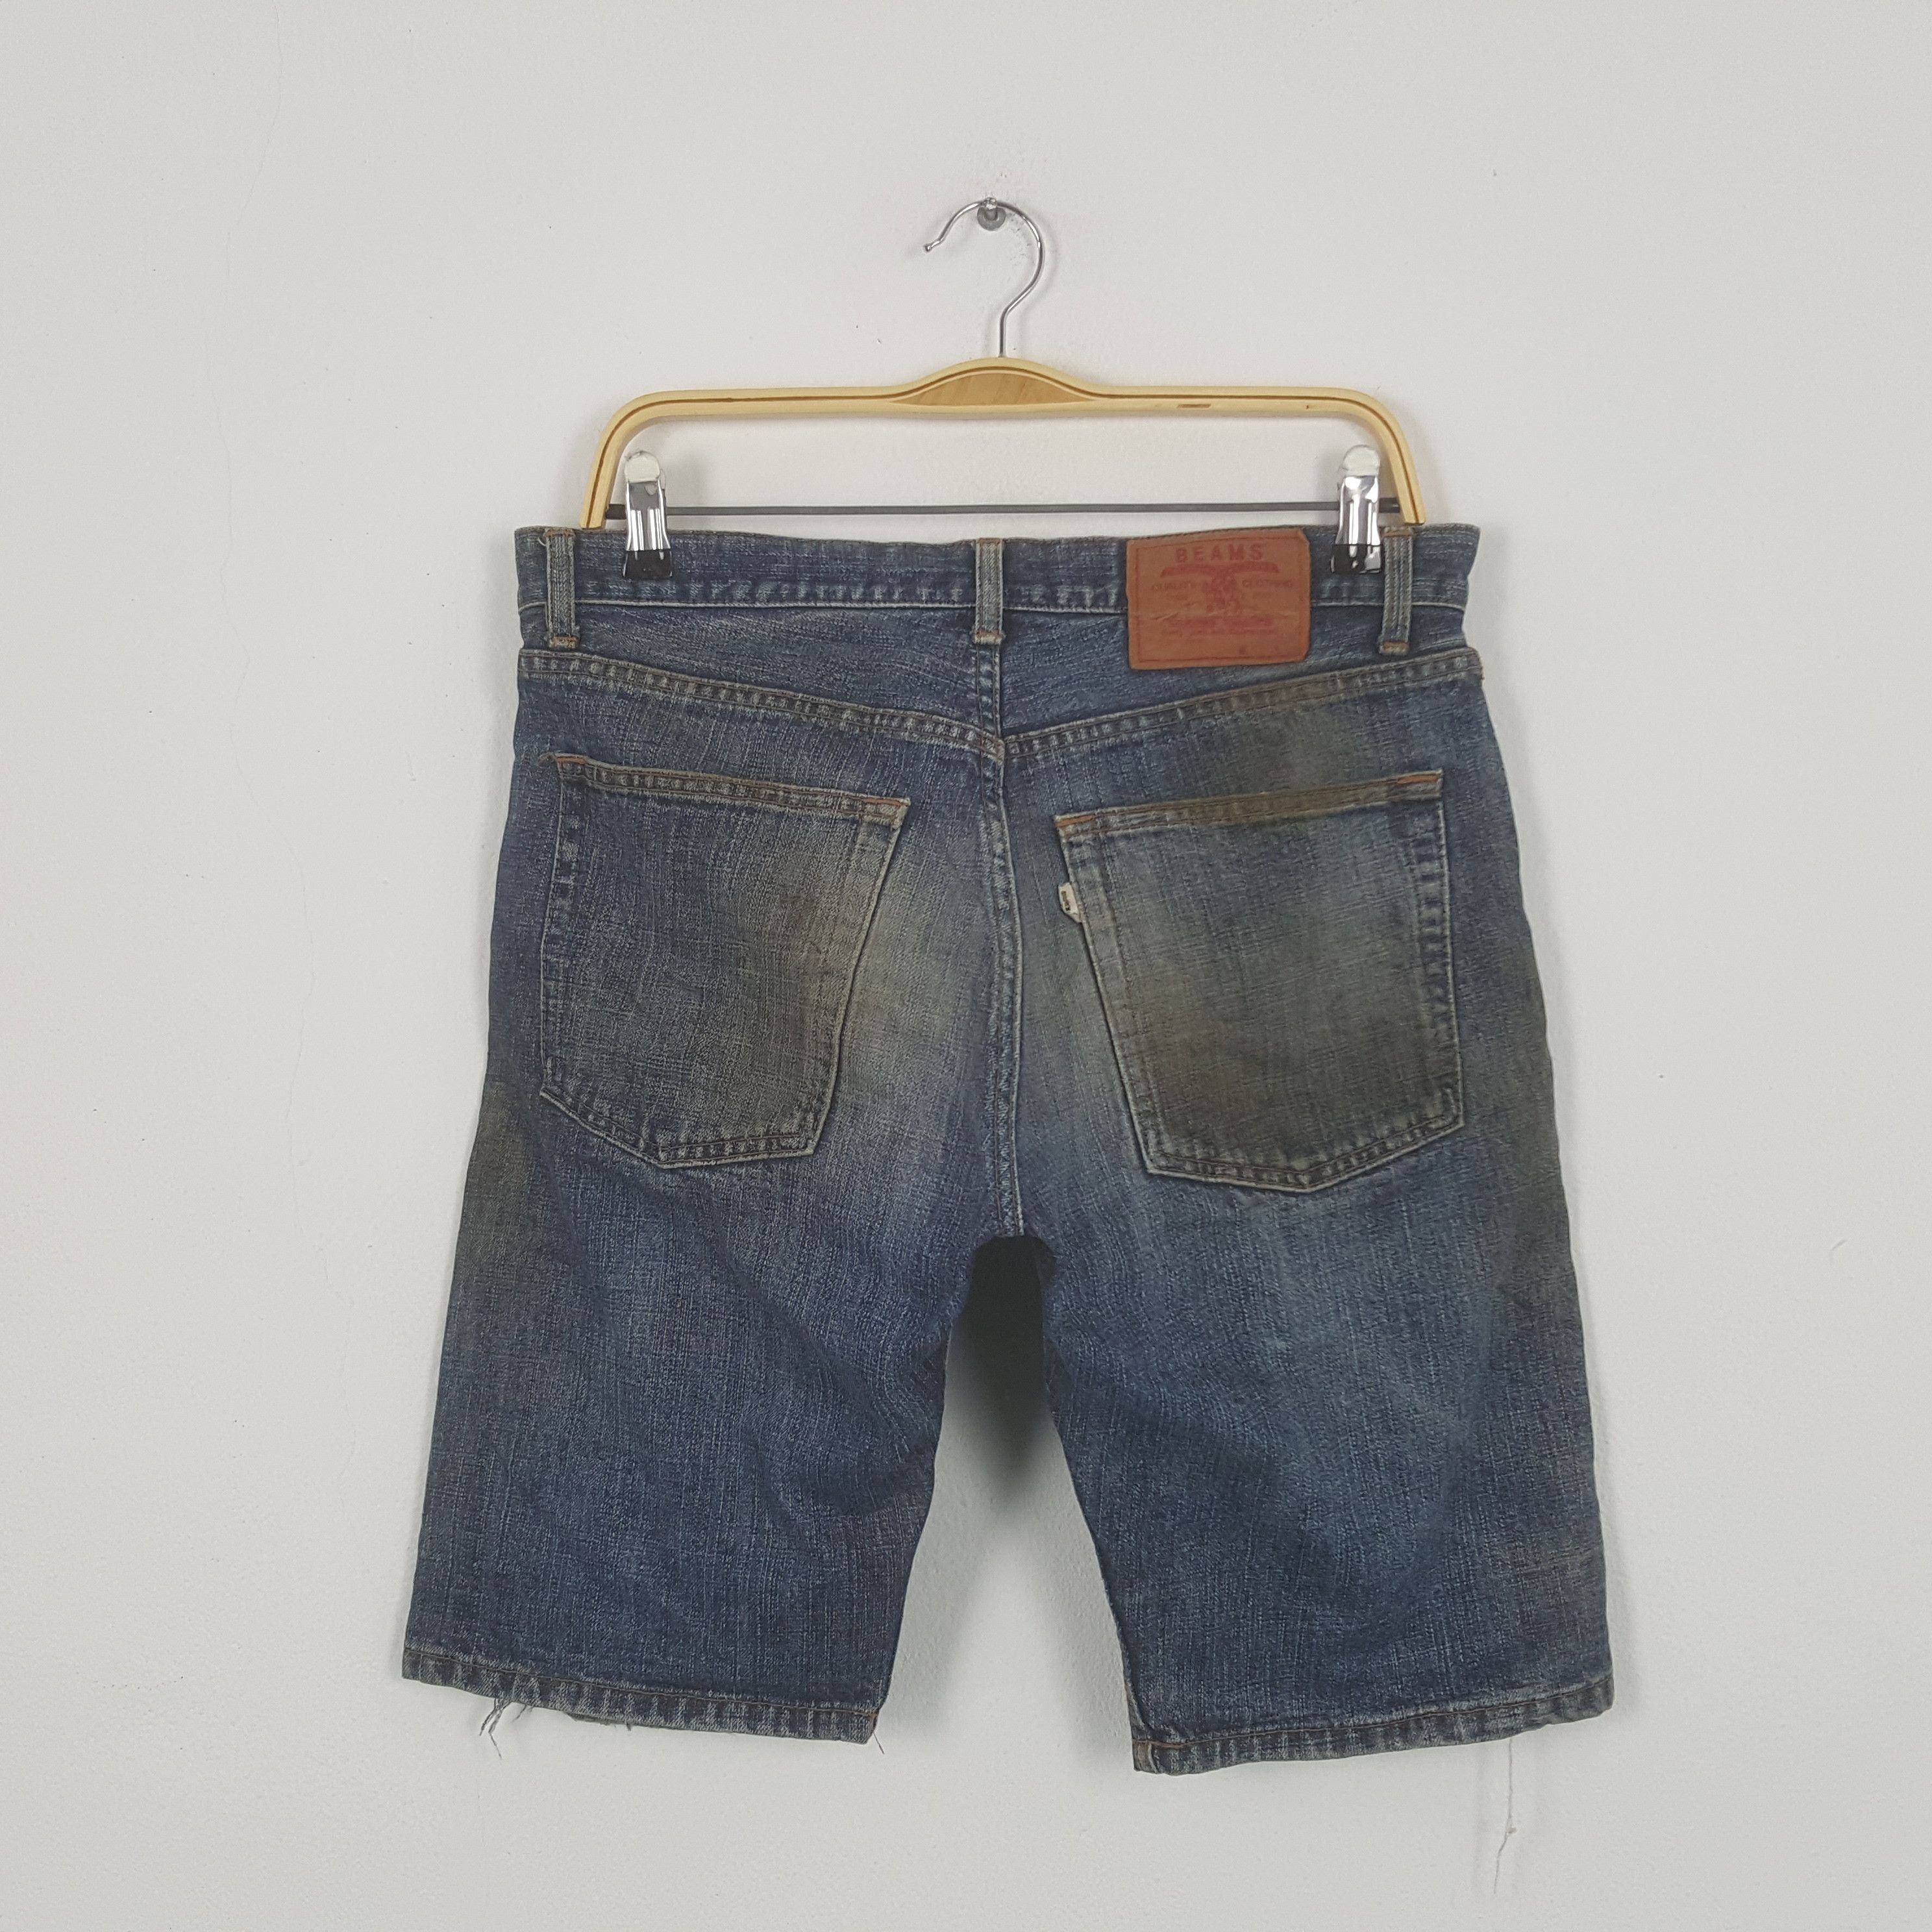 Vintage Vintage Beams Japanese Brand Distressed Shorts Denim Jeans Size US 32 / EU 48 - 1 Preview